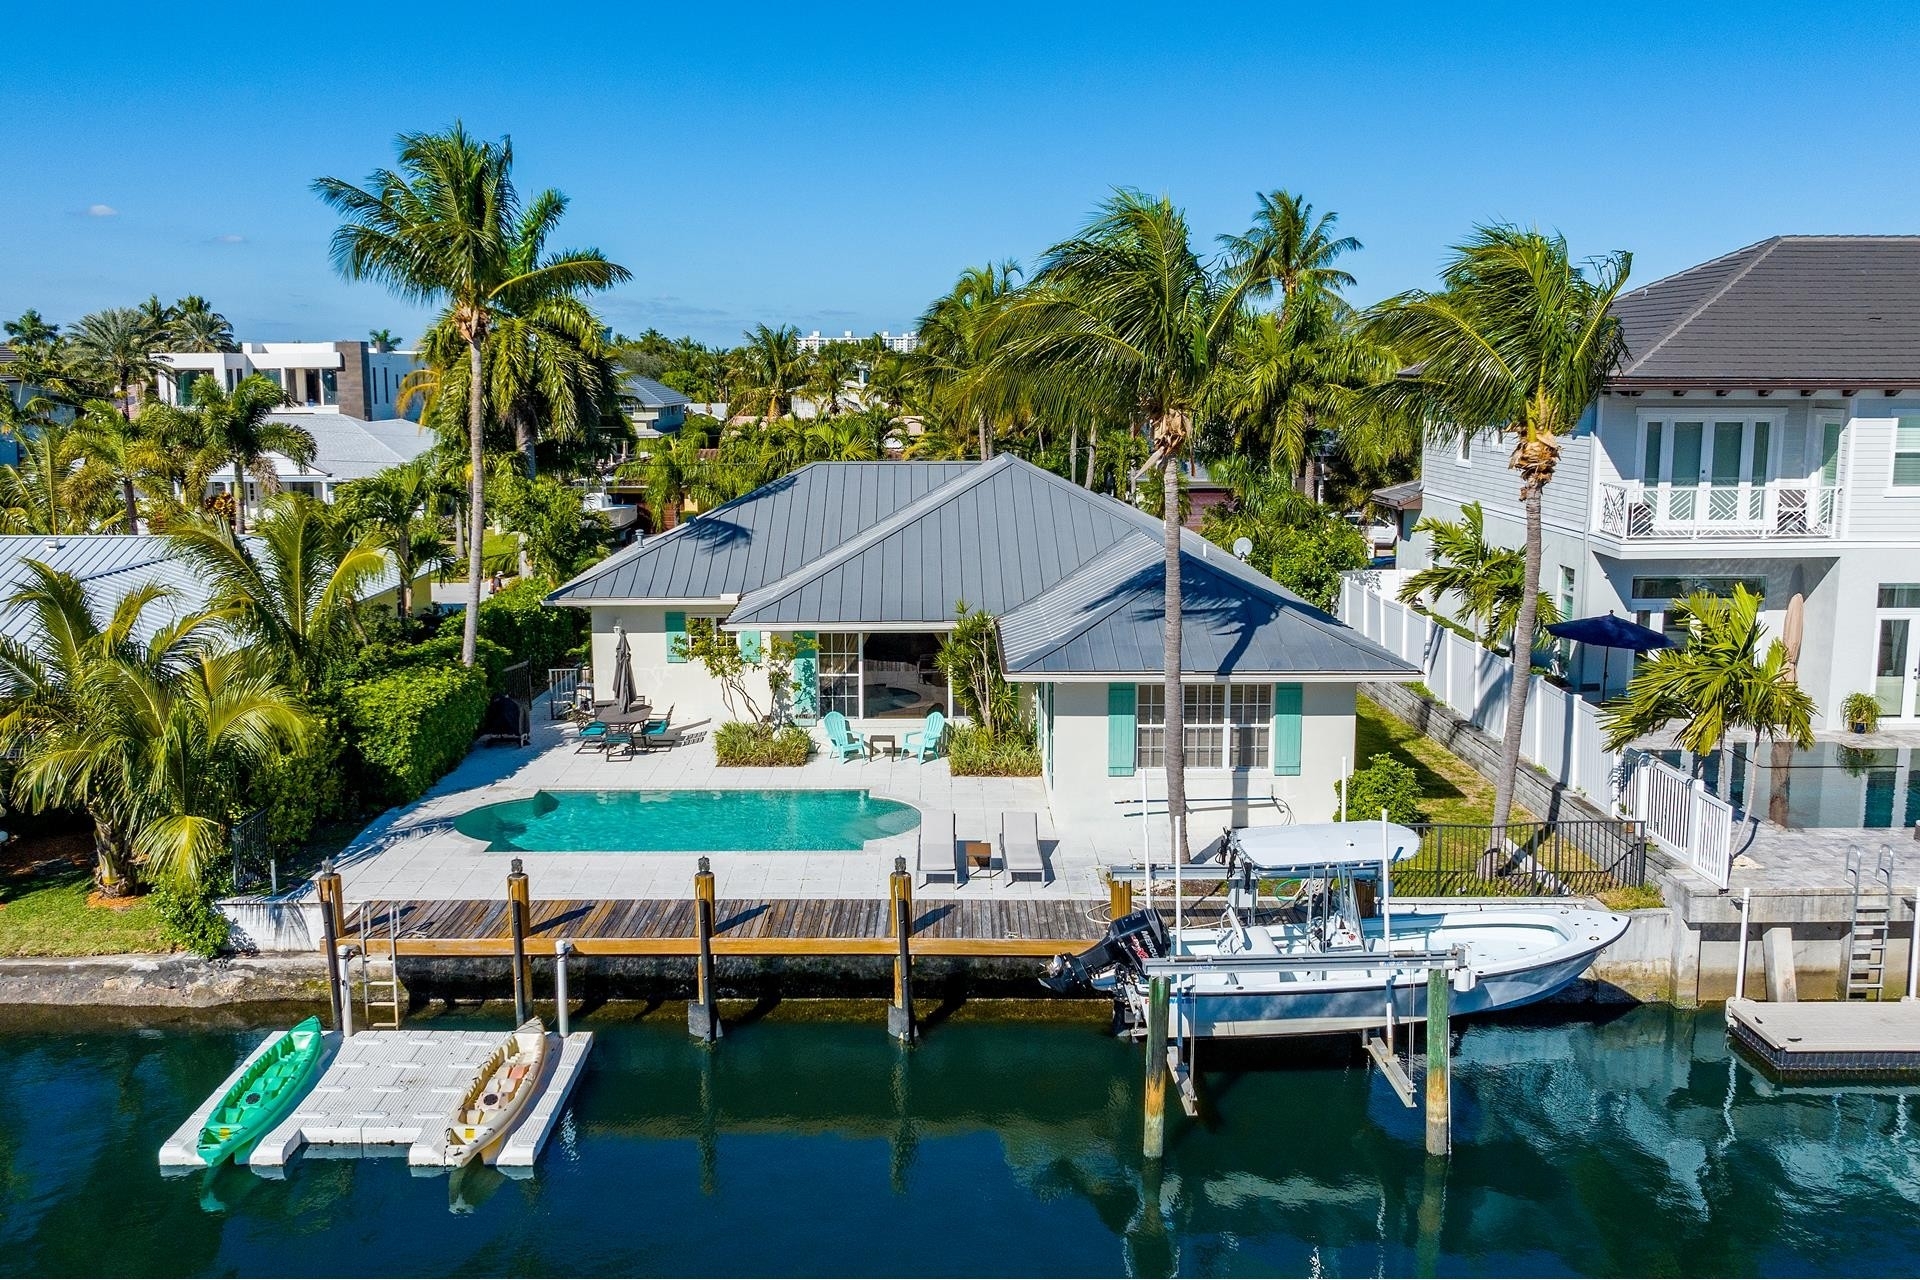 Single Family Home for Sale at Delray Beach Association, Delray Beach, Florida 33483